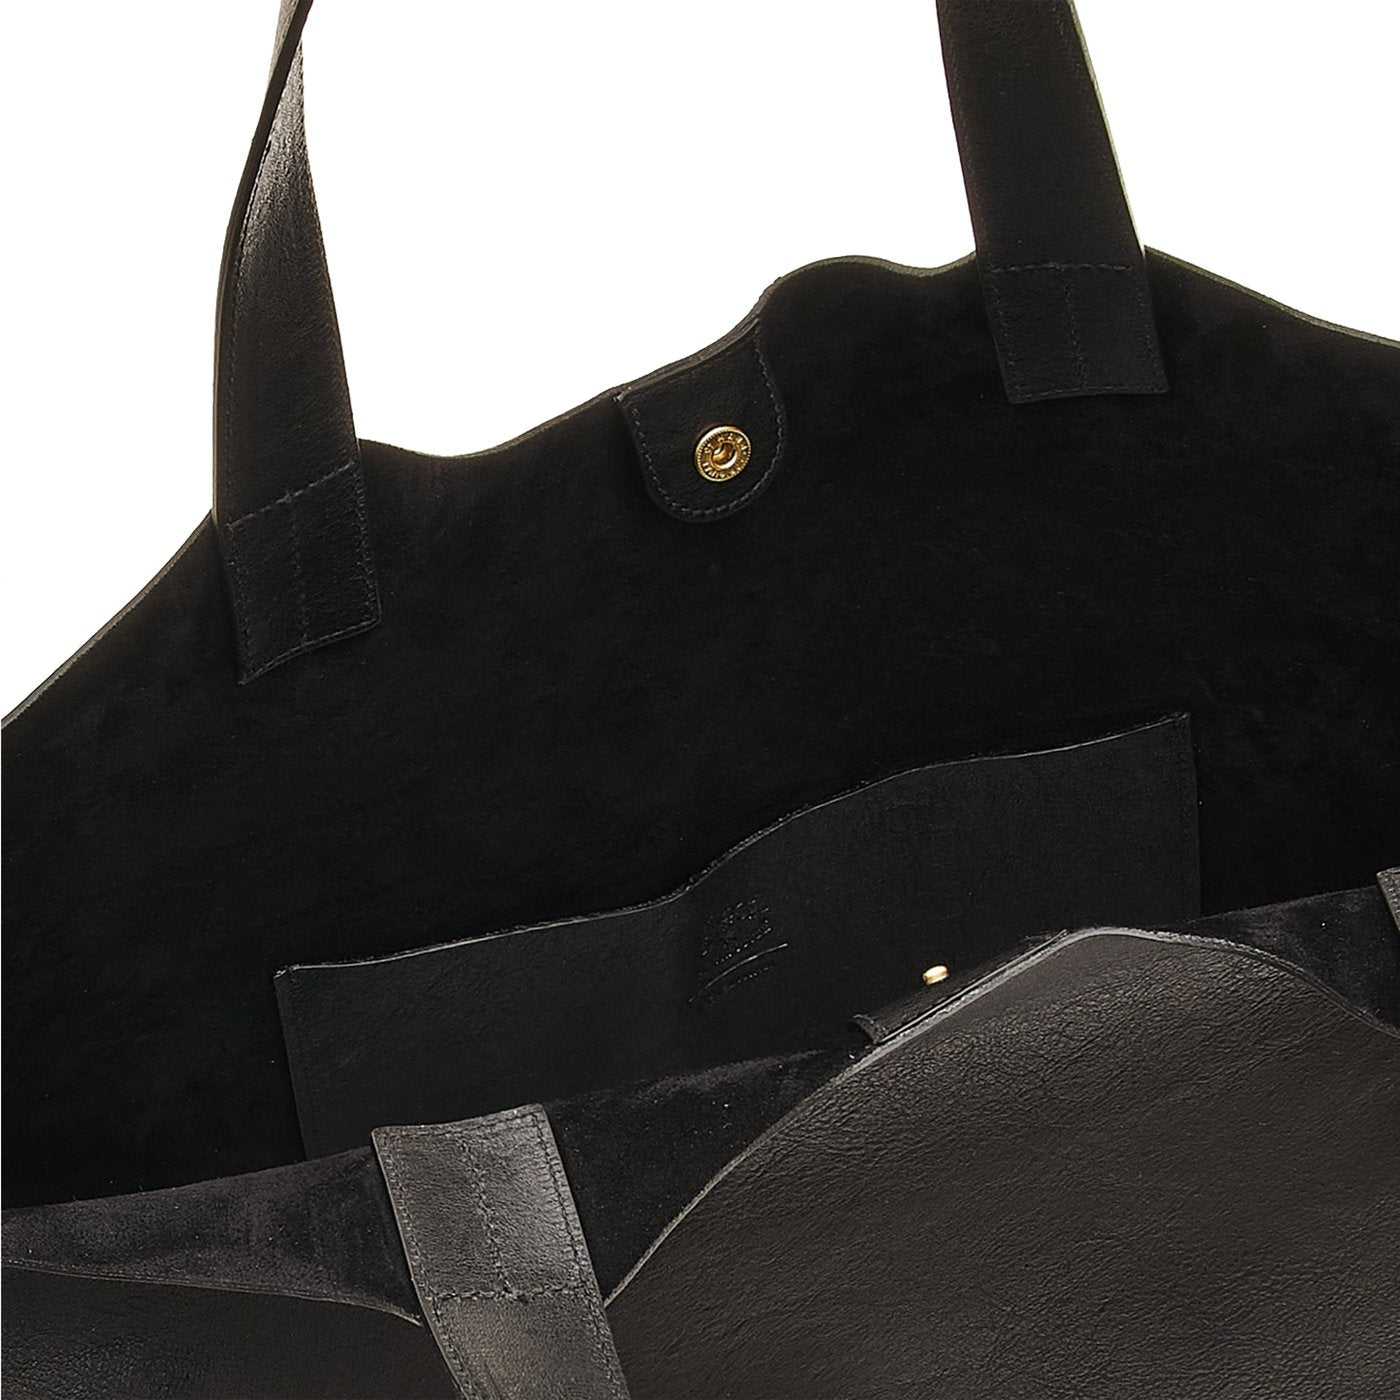 Le laudi | Women's tote bag in vintage leather color black